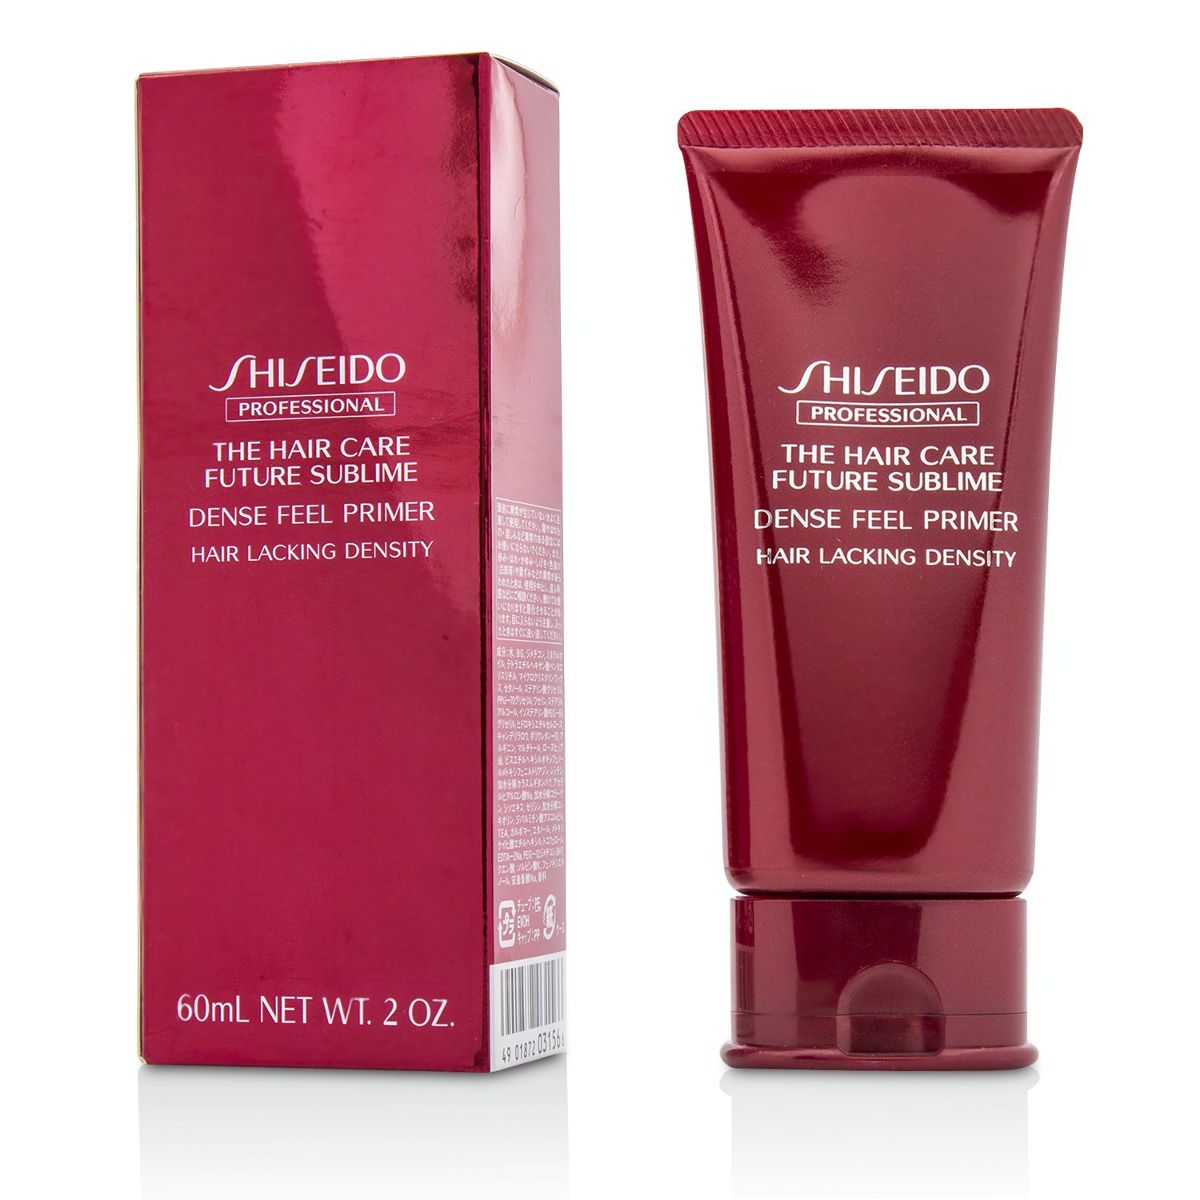 The Hair Care Future Sublime Dense Feel Primer (Hair Lacking Density) Shiseido Image